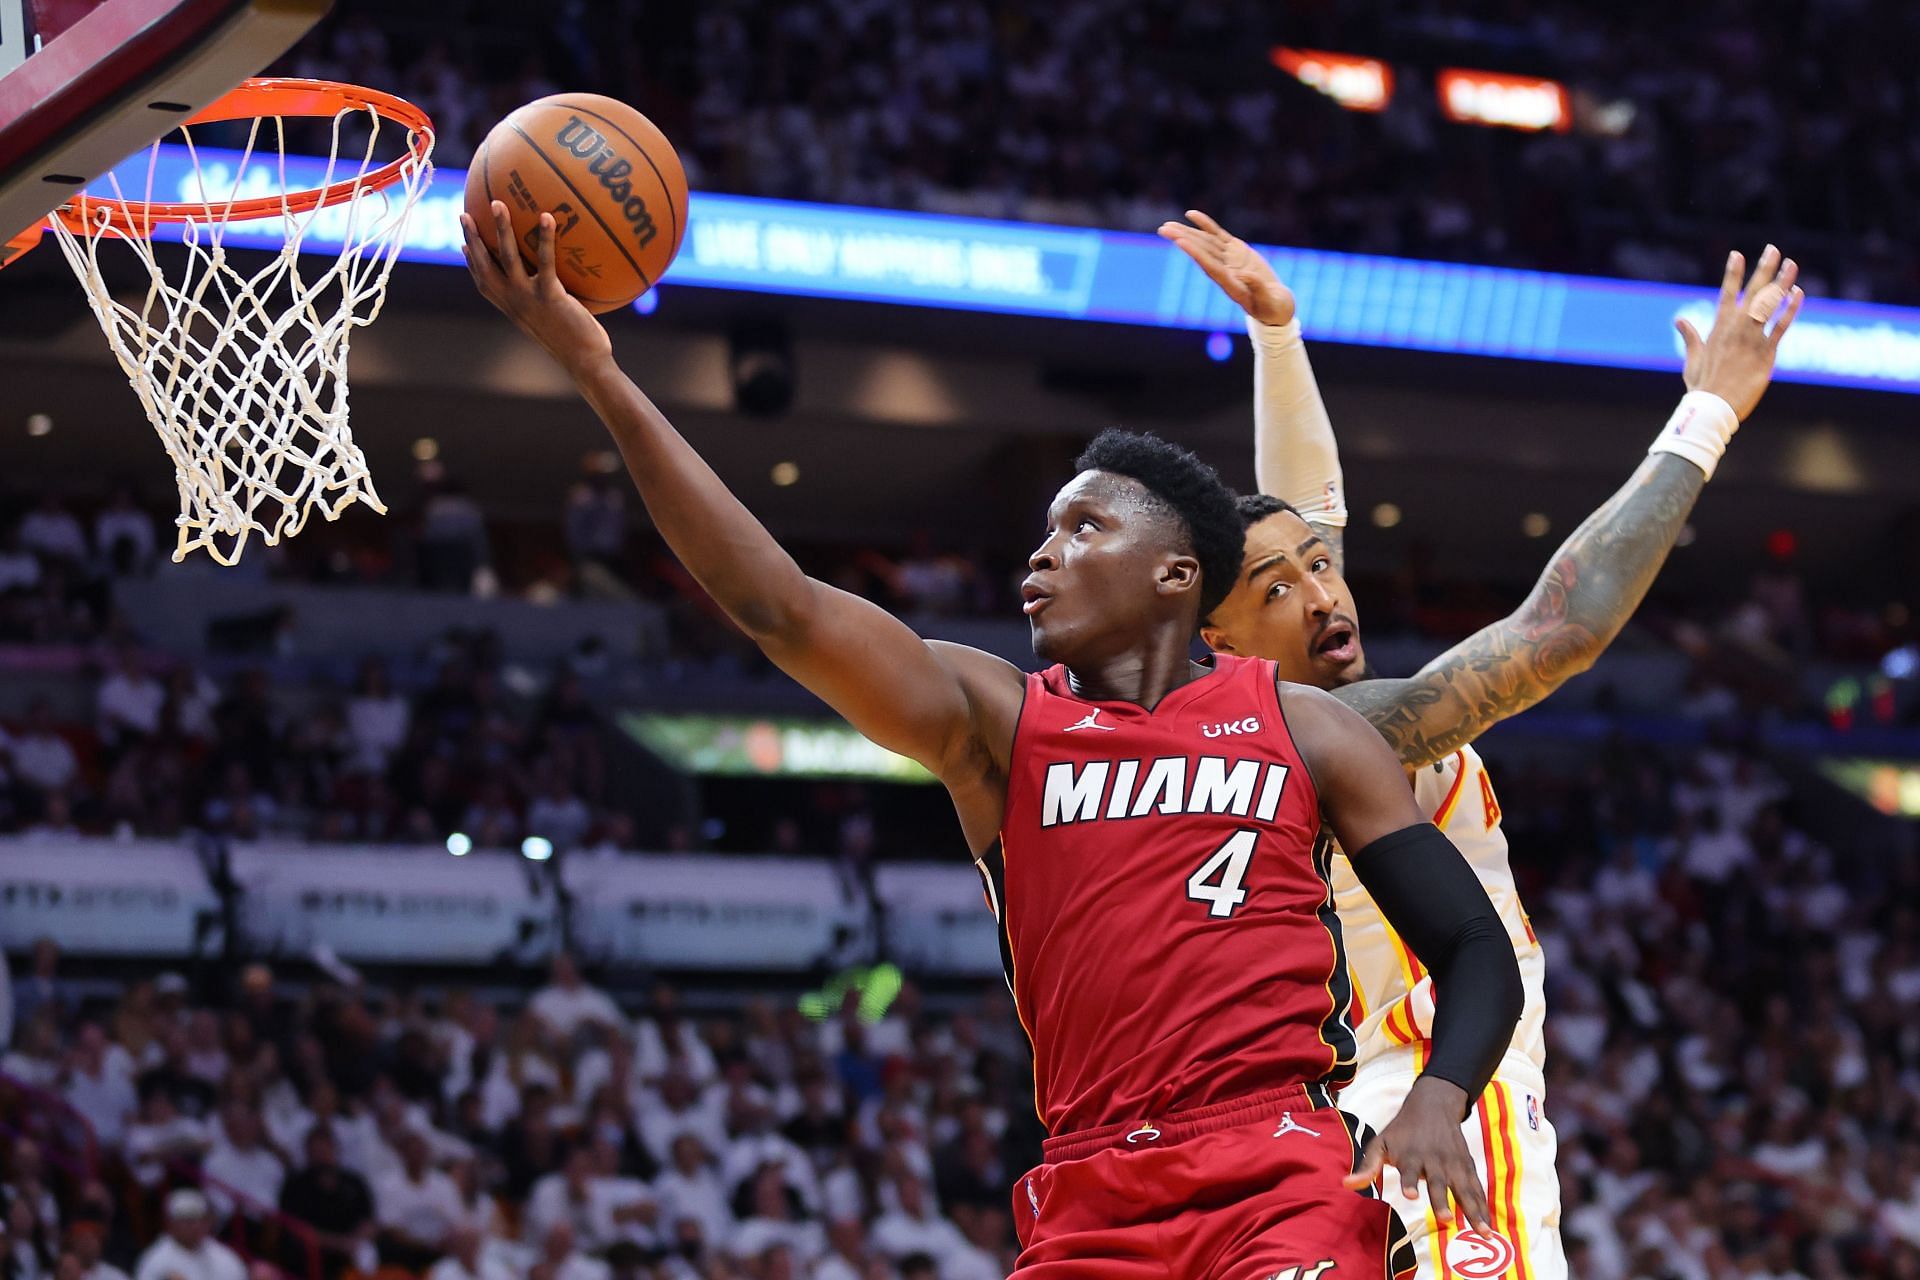 Atlanta Hawks vs. Miami Heat &mdash; NBA Game 5